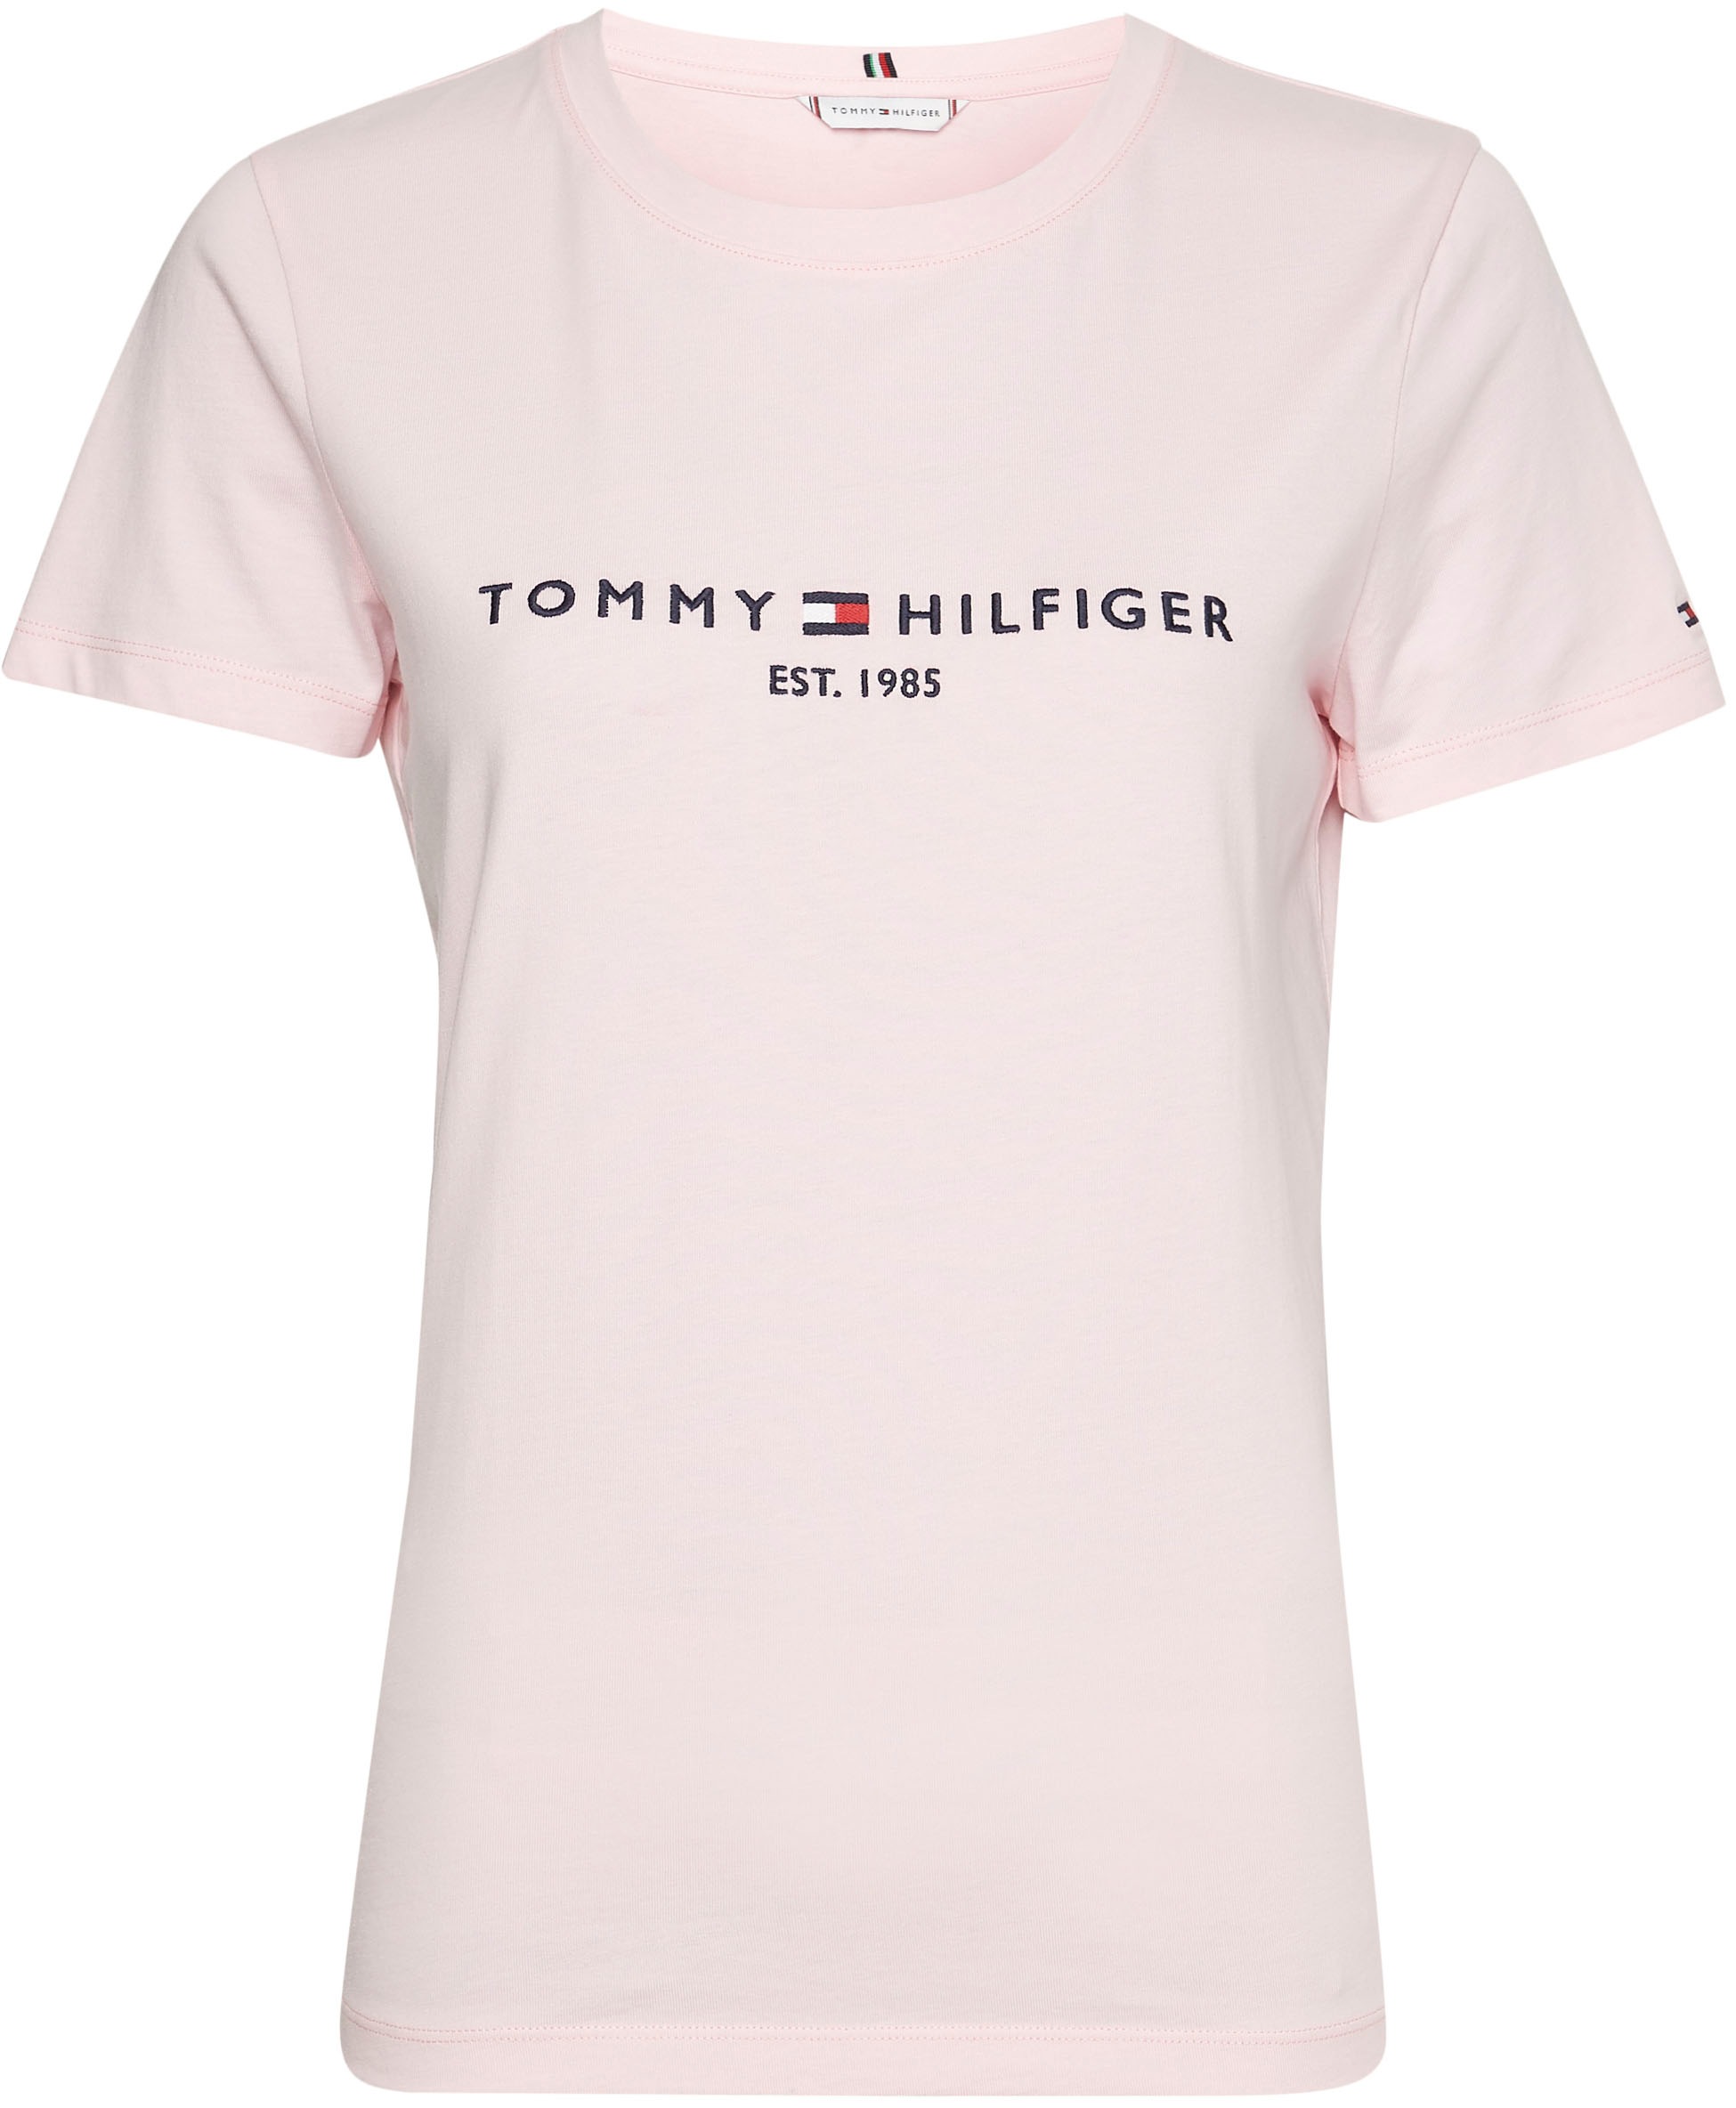 Tommy Hilfiger Rundhalsshirt »TH ESS Tommy Hilfiger mit C-NK bei SS«, HILFIGER ♕ Logo-Schriftzug Linear REG TEE